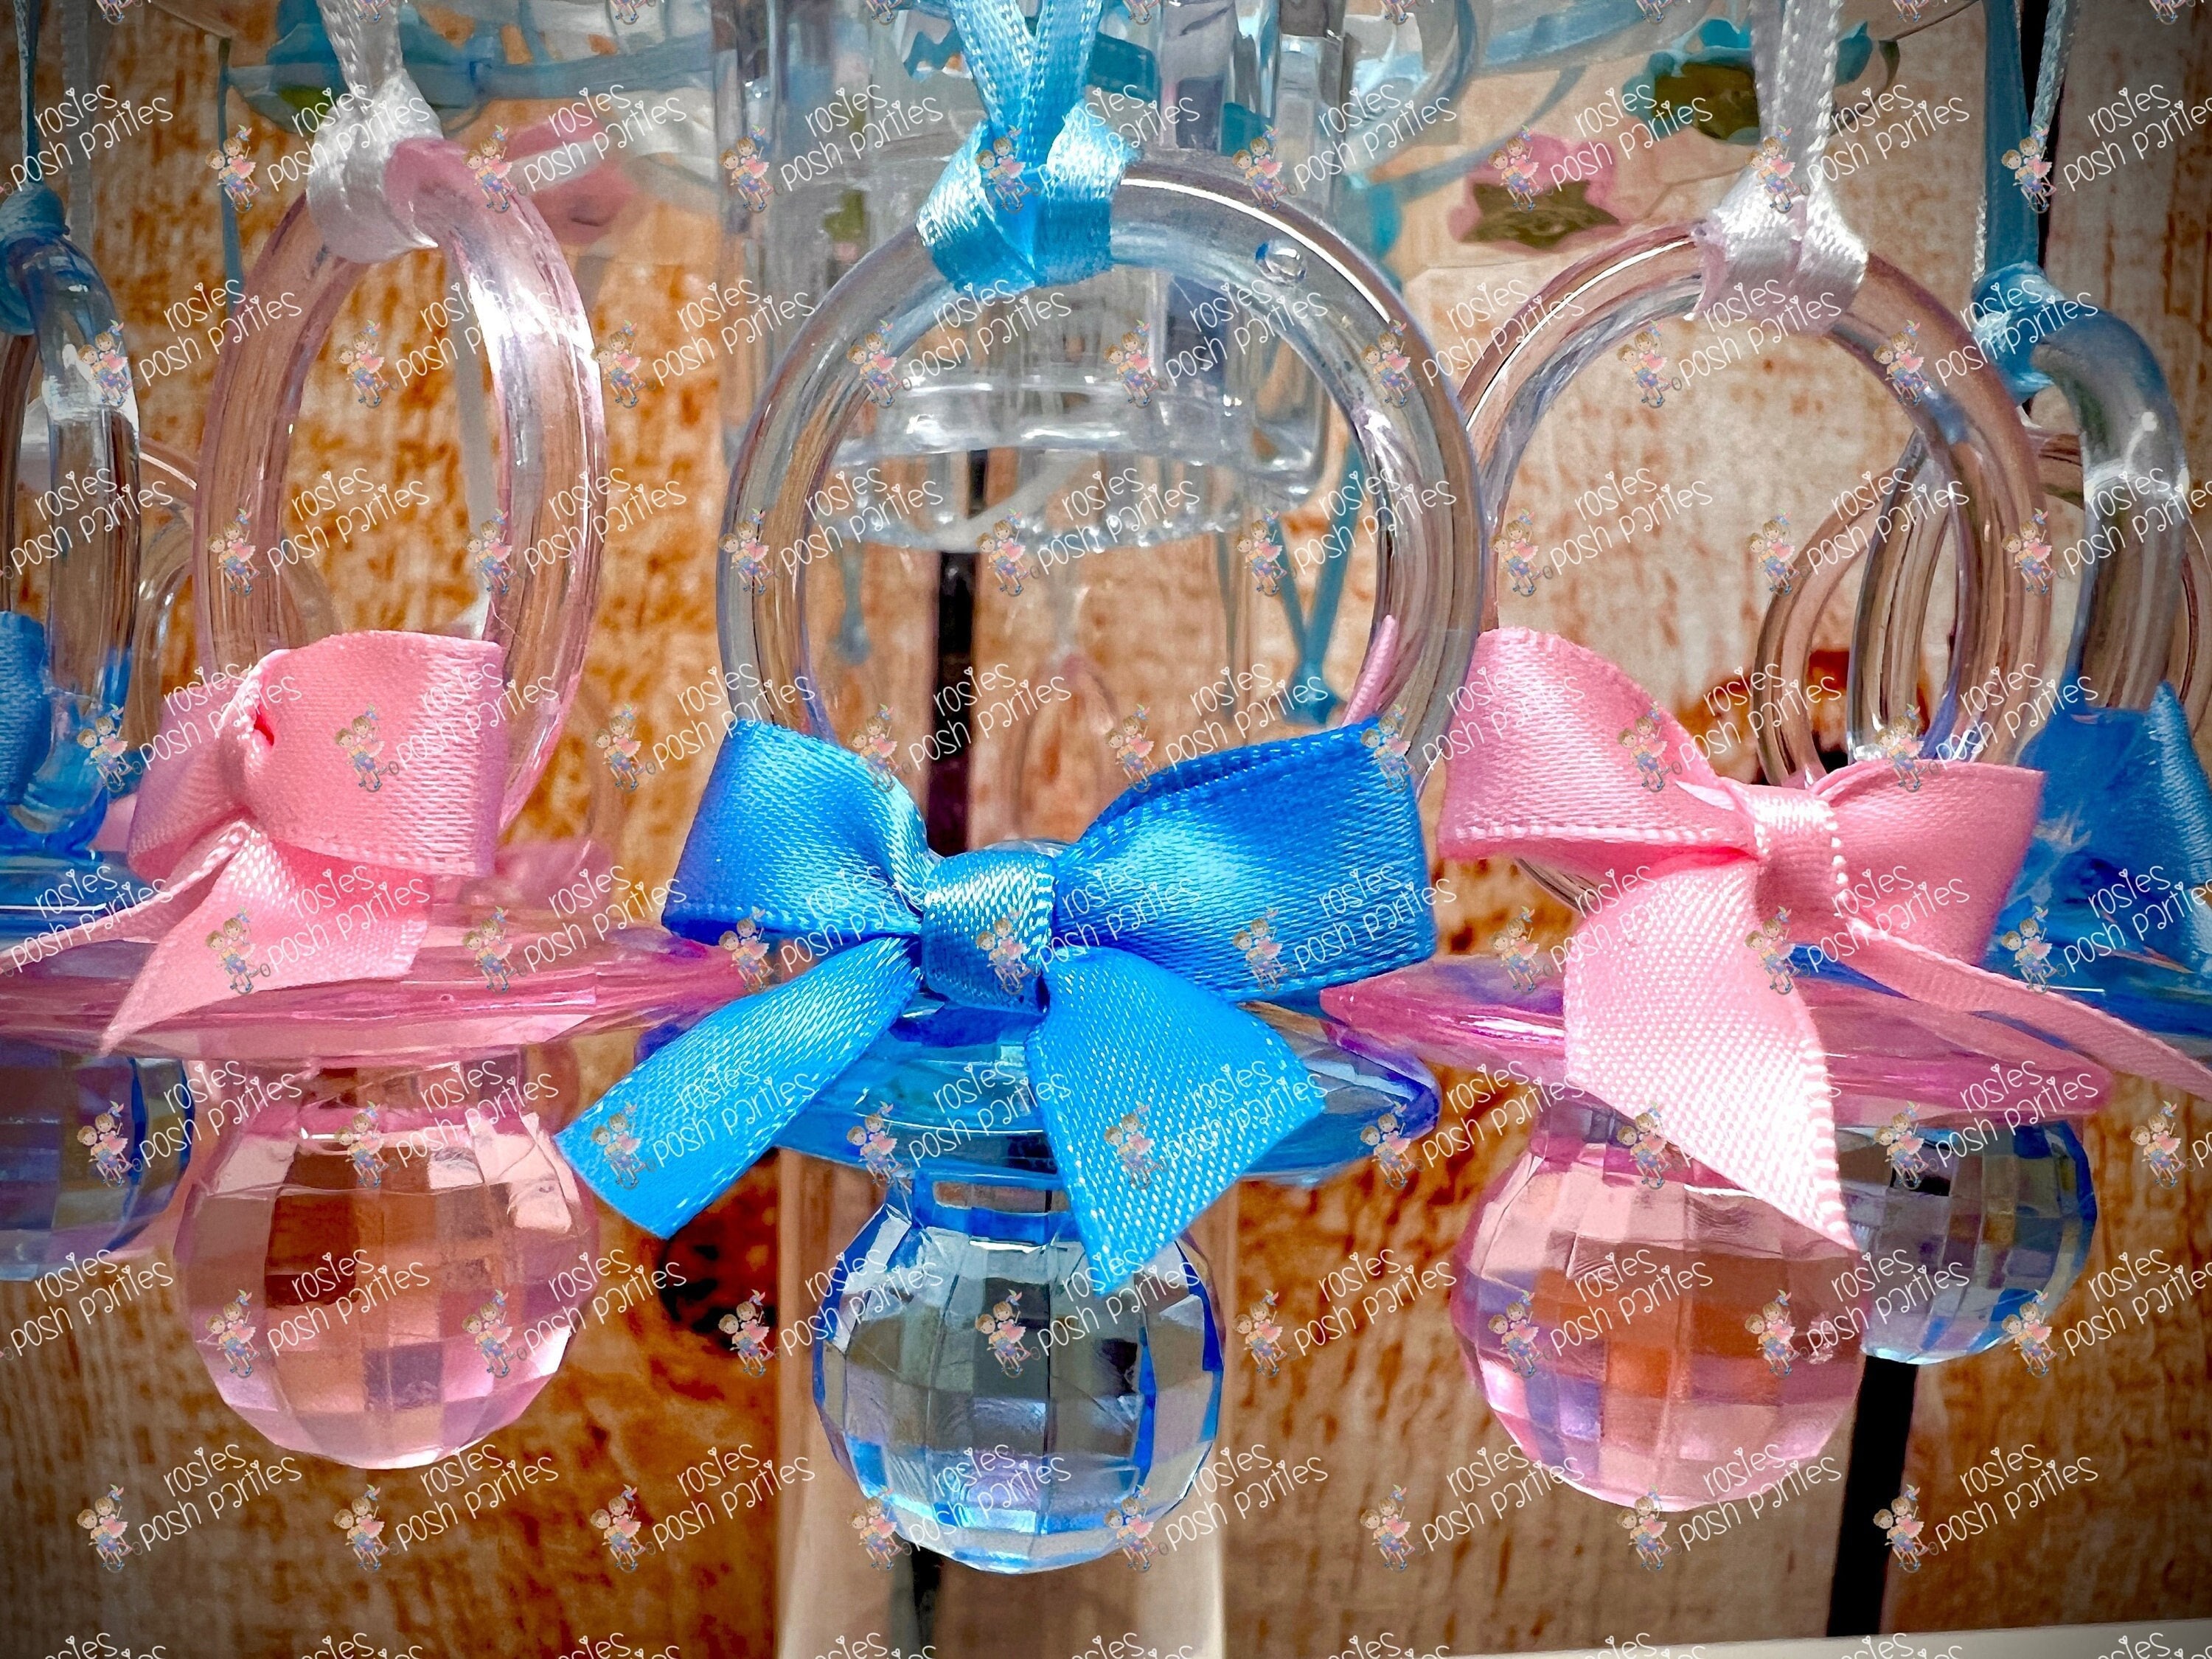 Bluey Birthday Theme Centerpiece Decoration  Rosies Posh Parties – Rosie's  Posh Parties